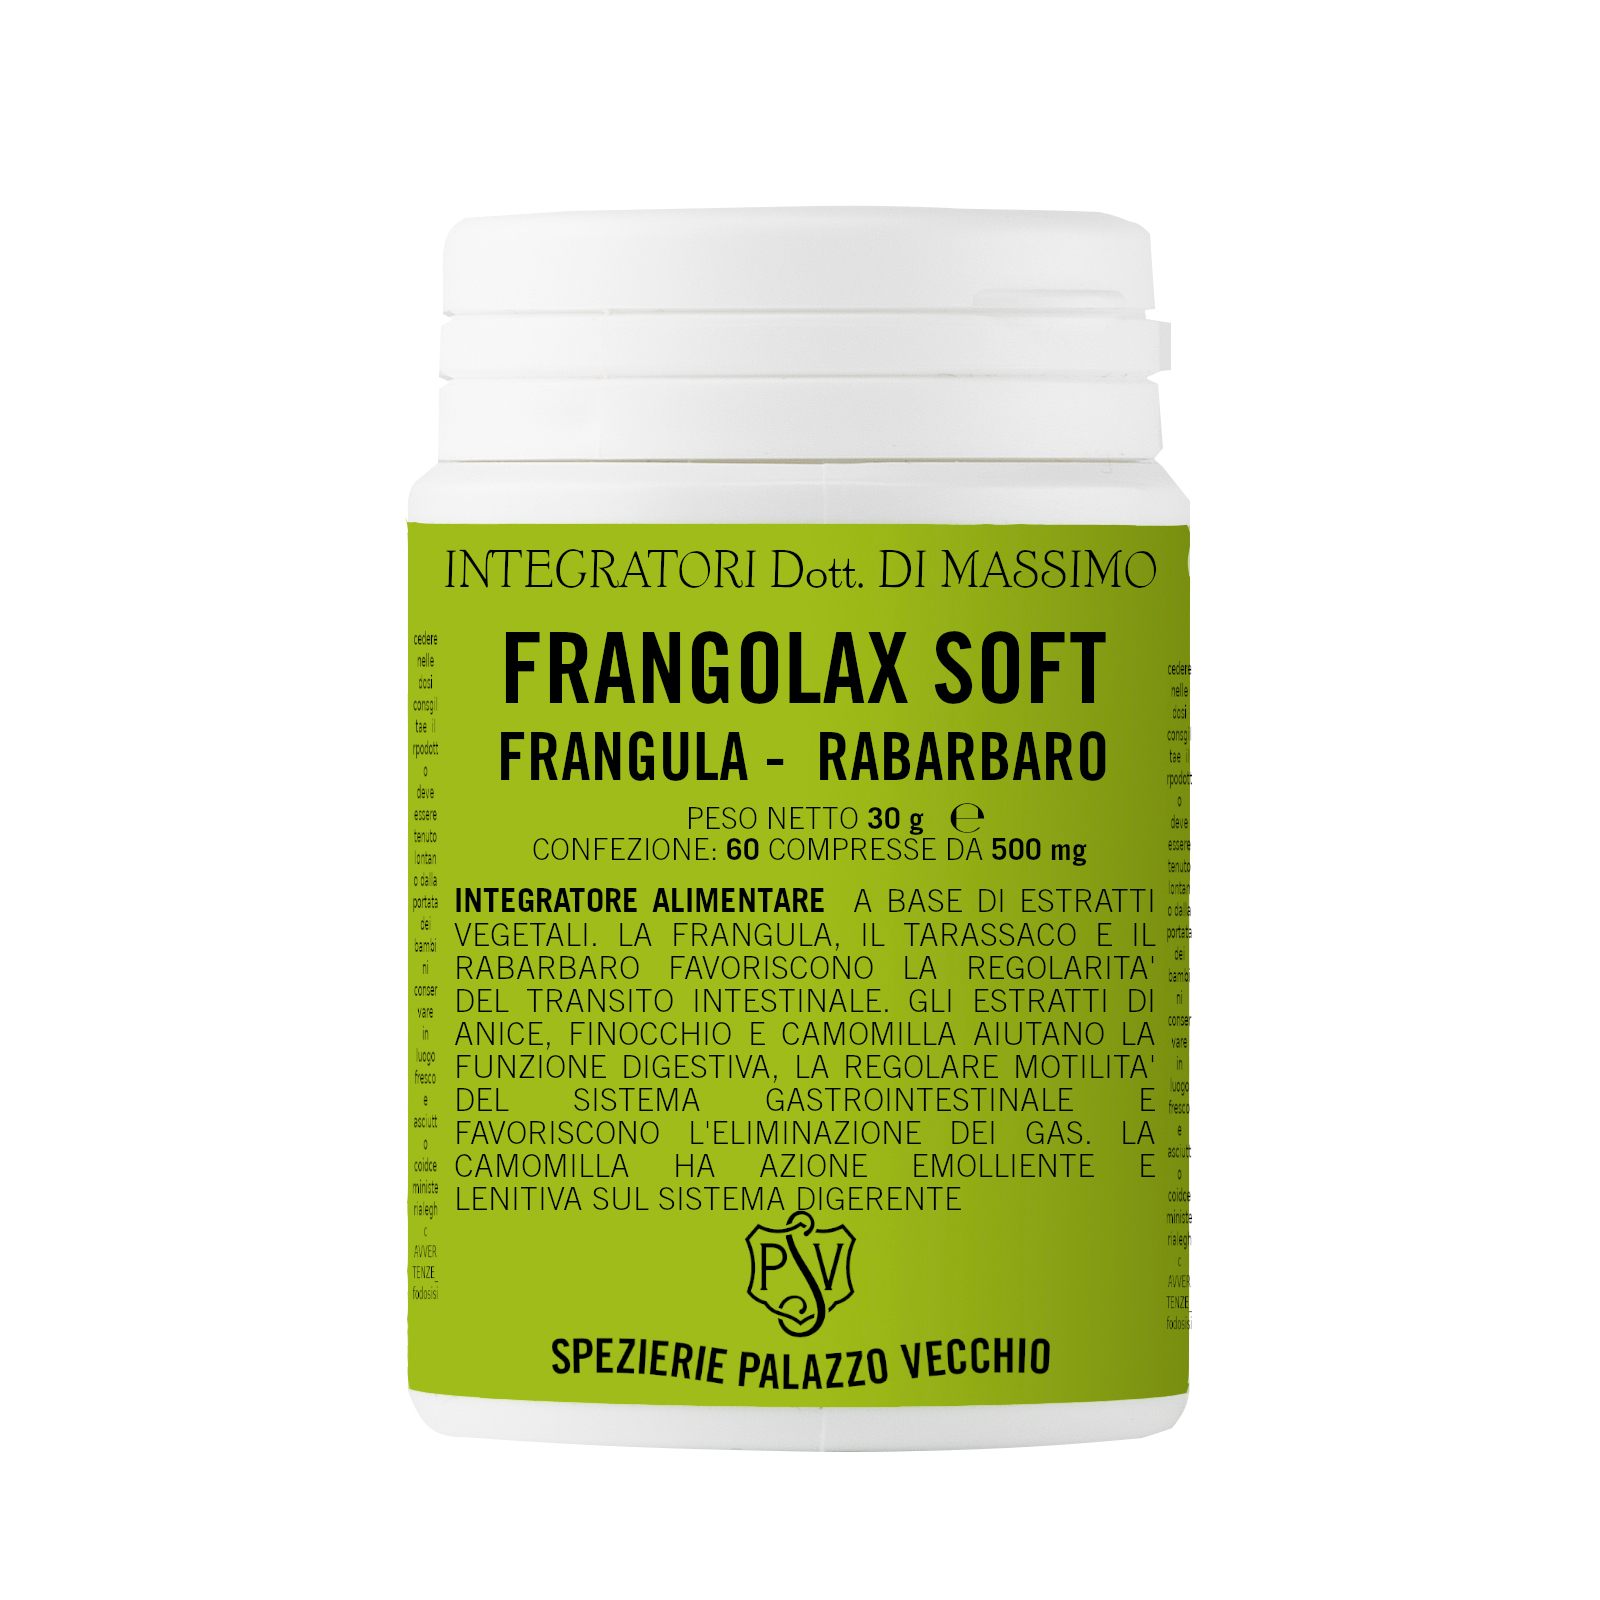 FRANGOLAX SOFT Frangula - Rabarbaro - Camomilla-0